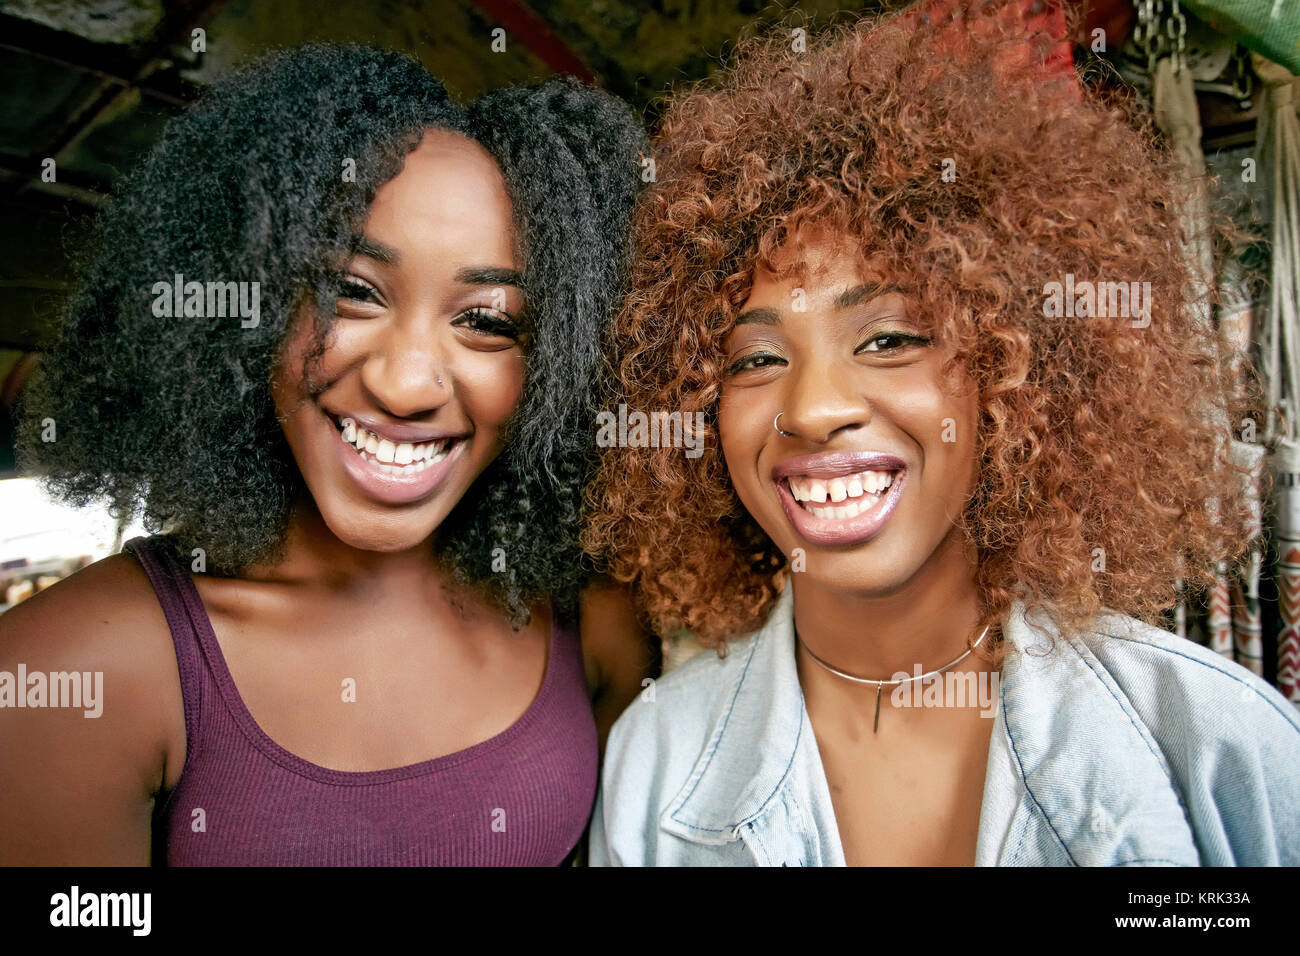 Portrait of smiling women Stock Photo